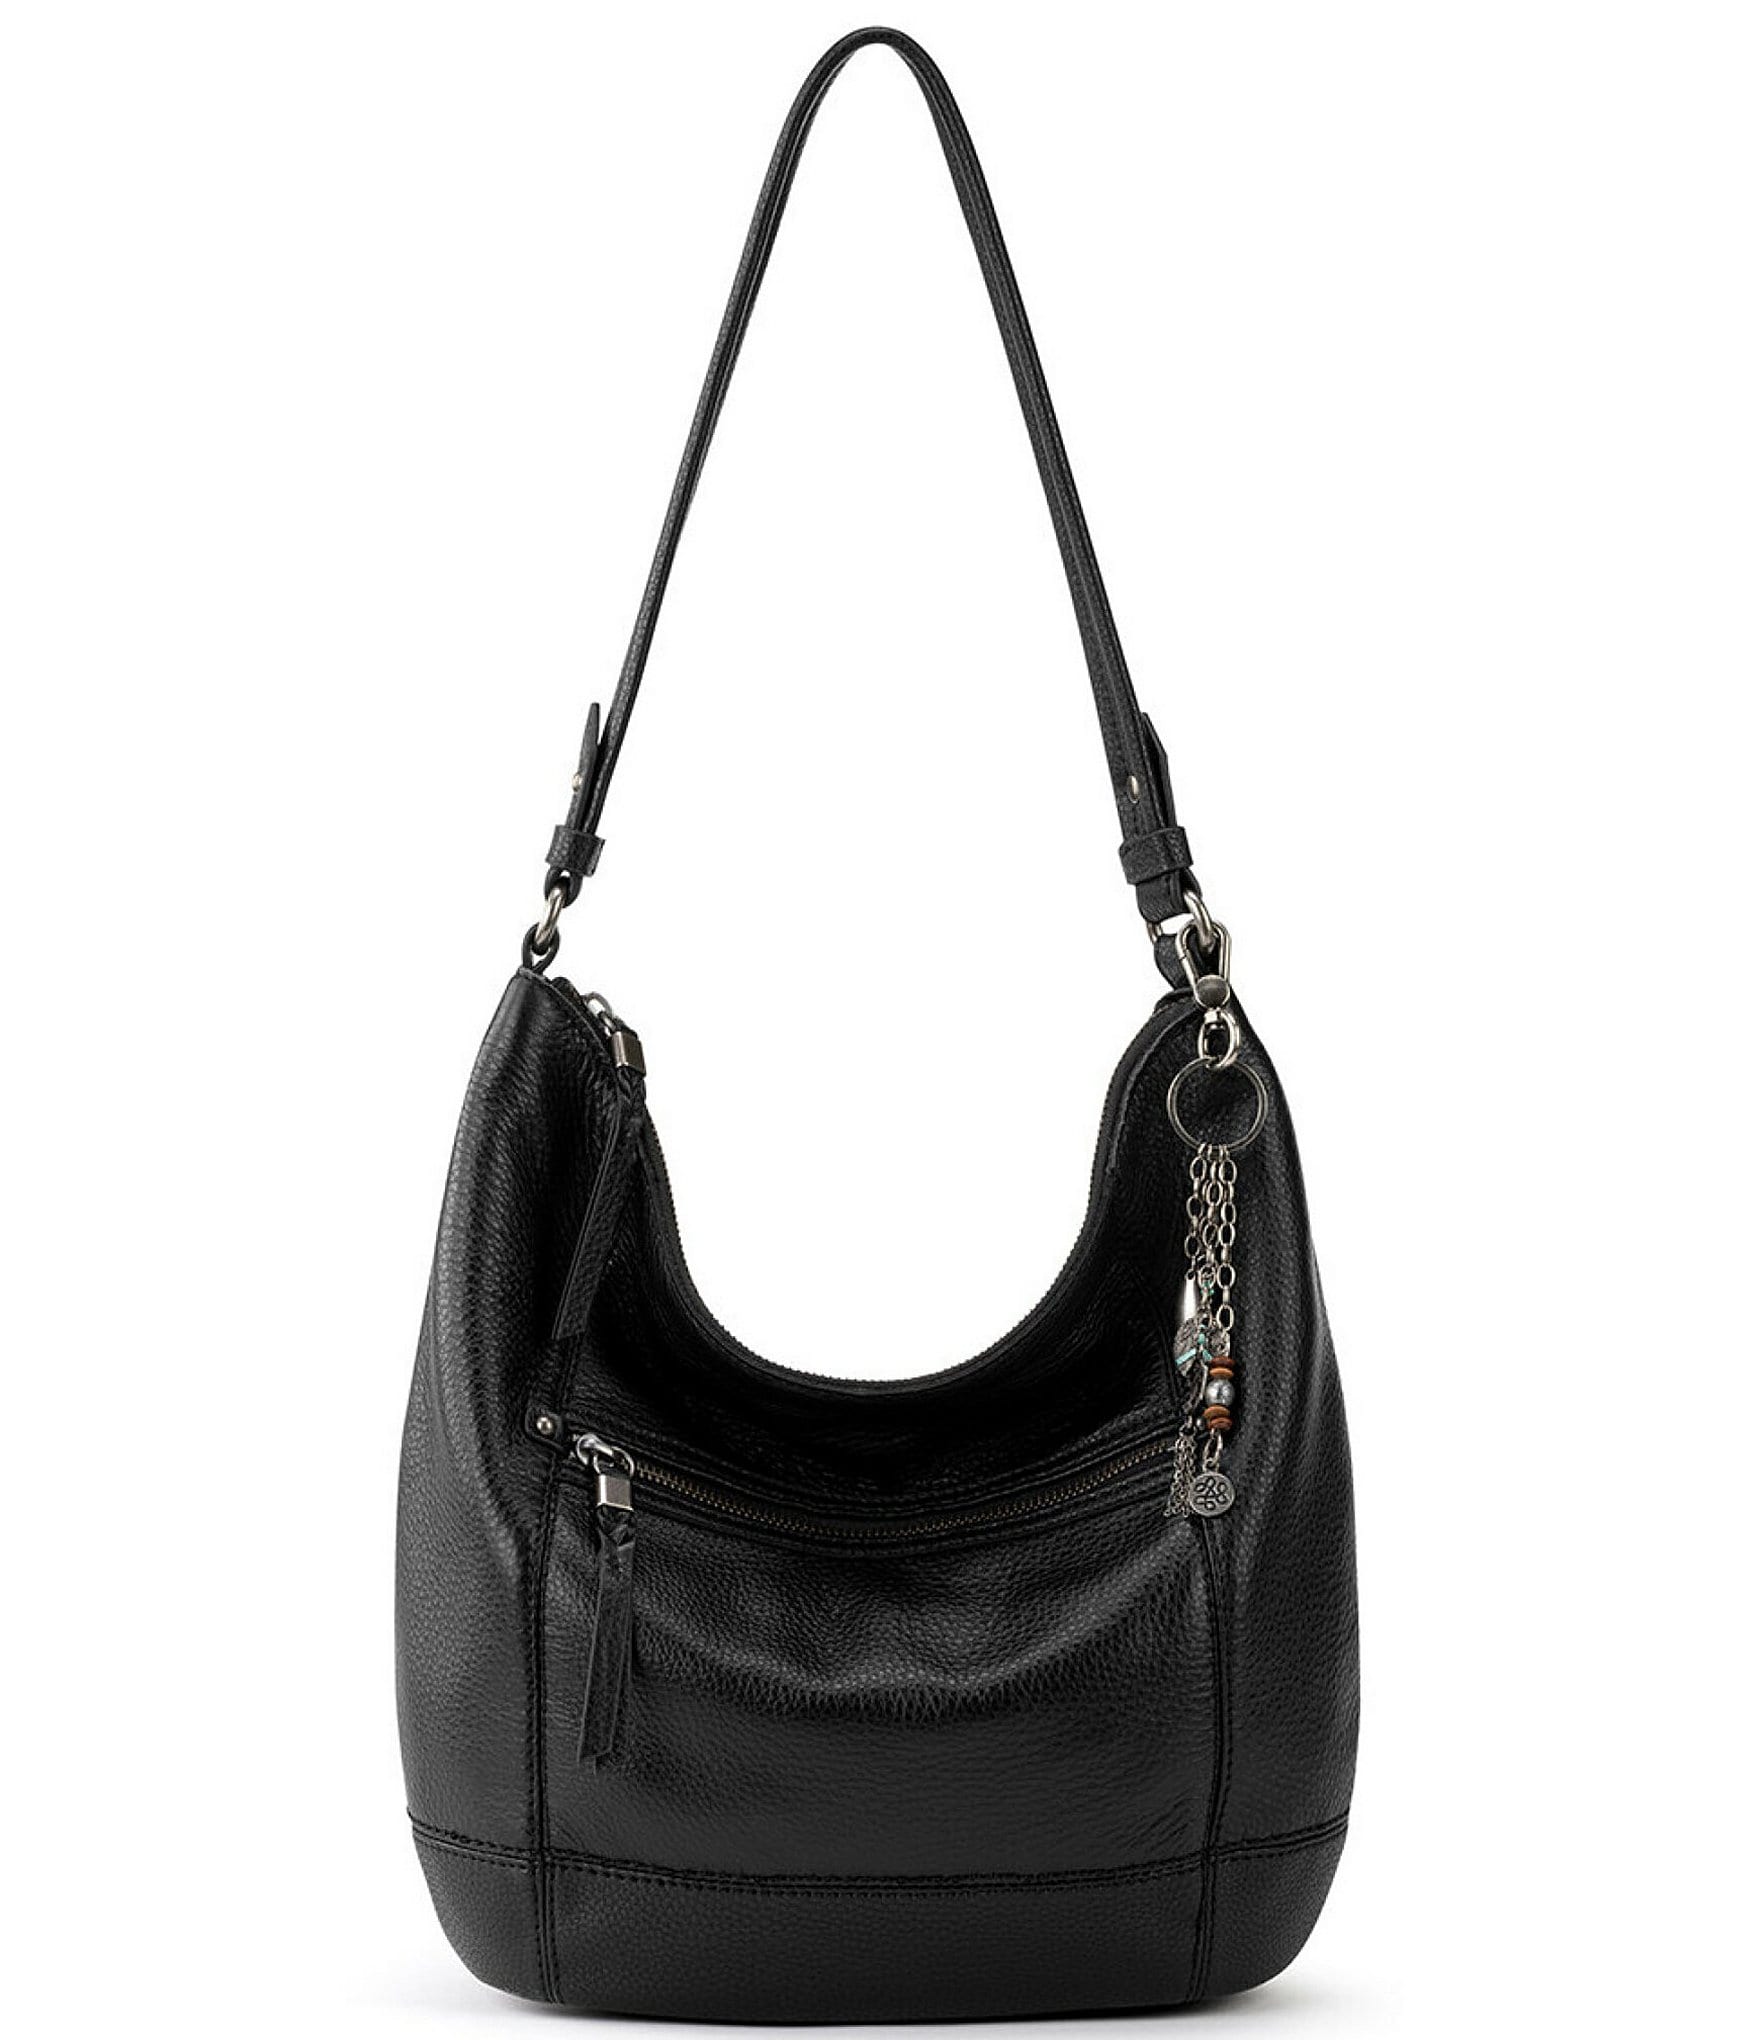 The Sak White Leather Purse | Cute Shoulder Bag